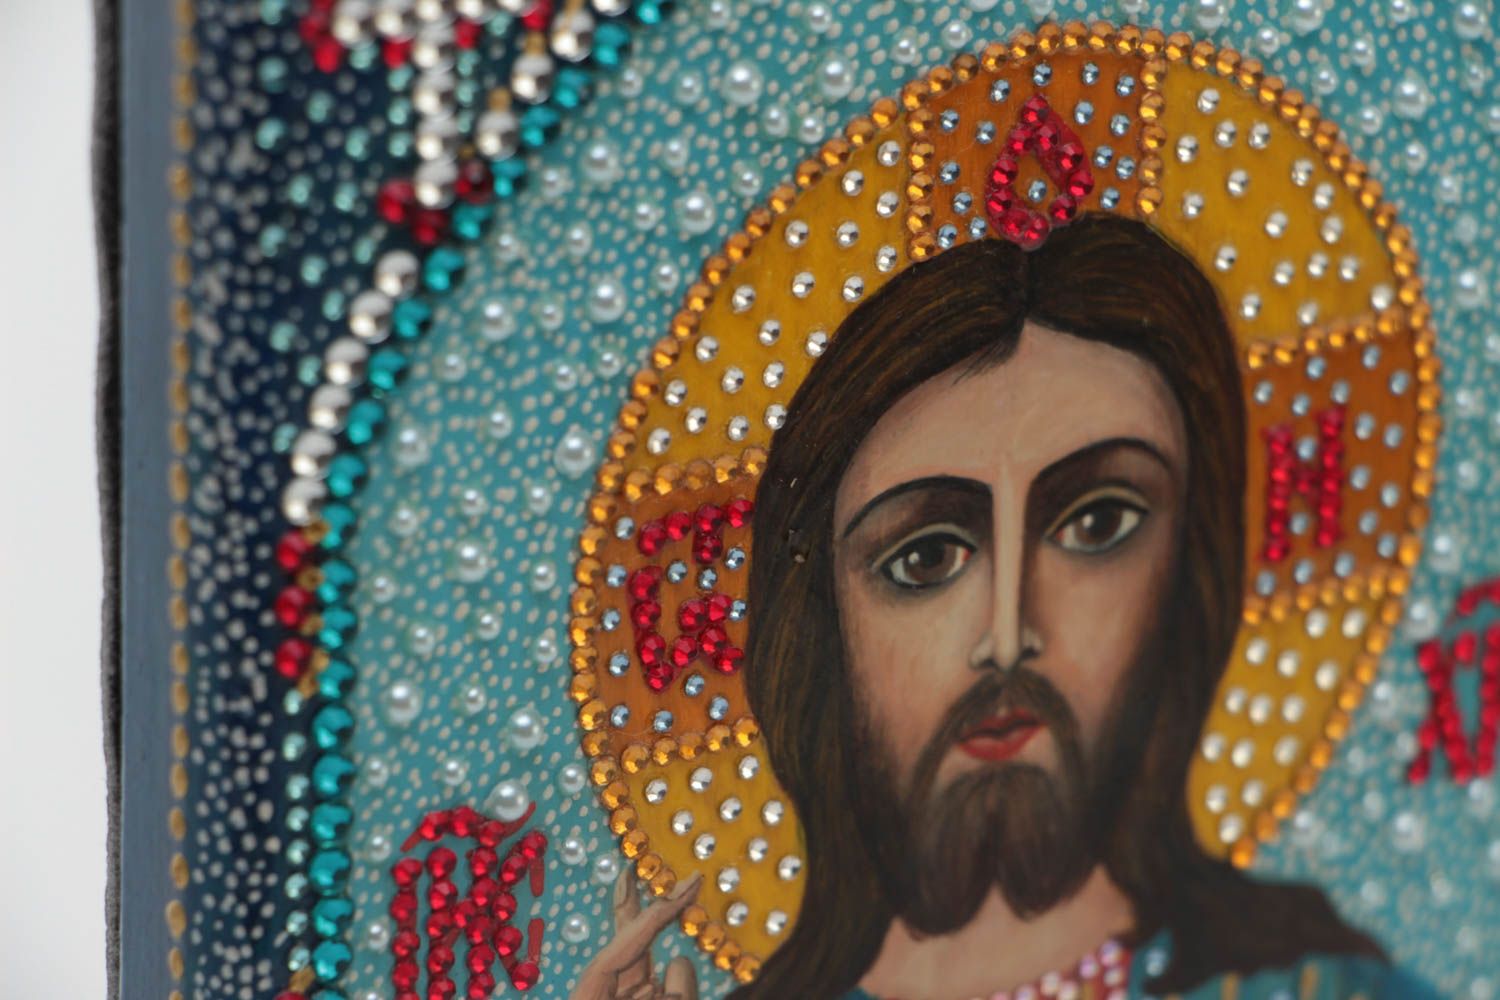 Icono religioso ortodoxo hecho a mano de madera pintado con estrases bonito foto 3